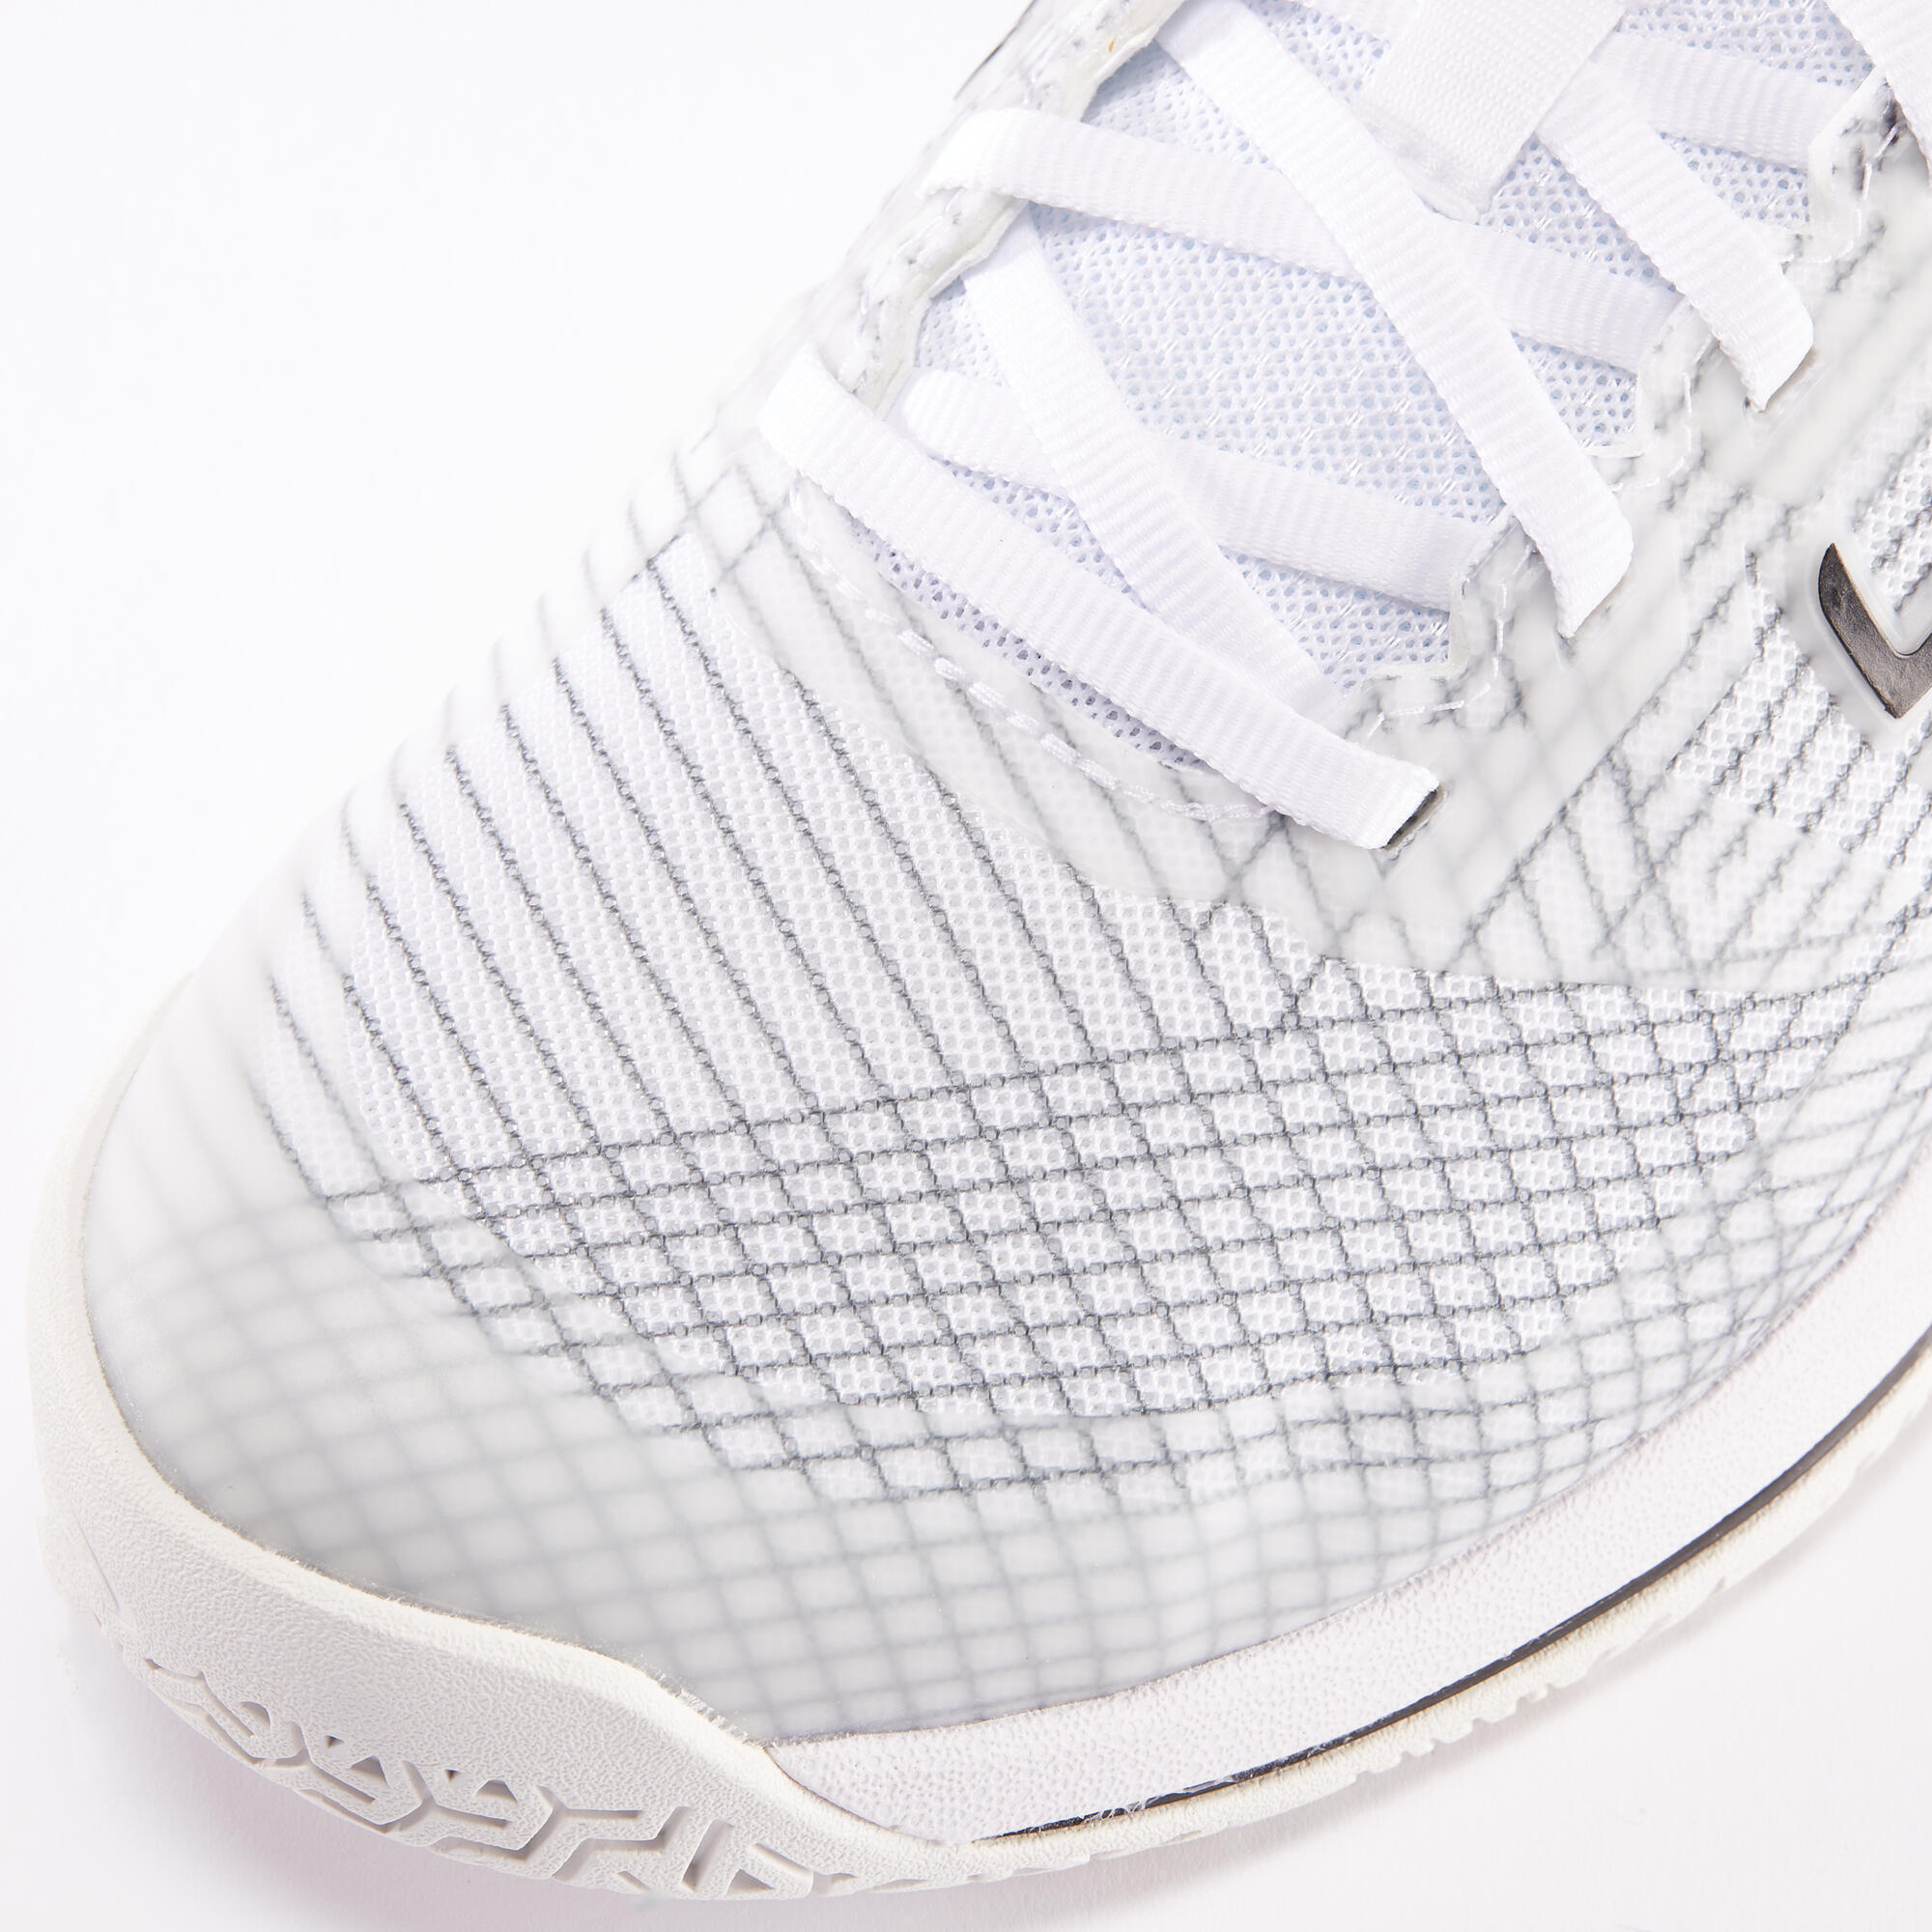 Multi-Court Tennis Shoes TS990 - White 4/8